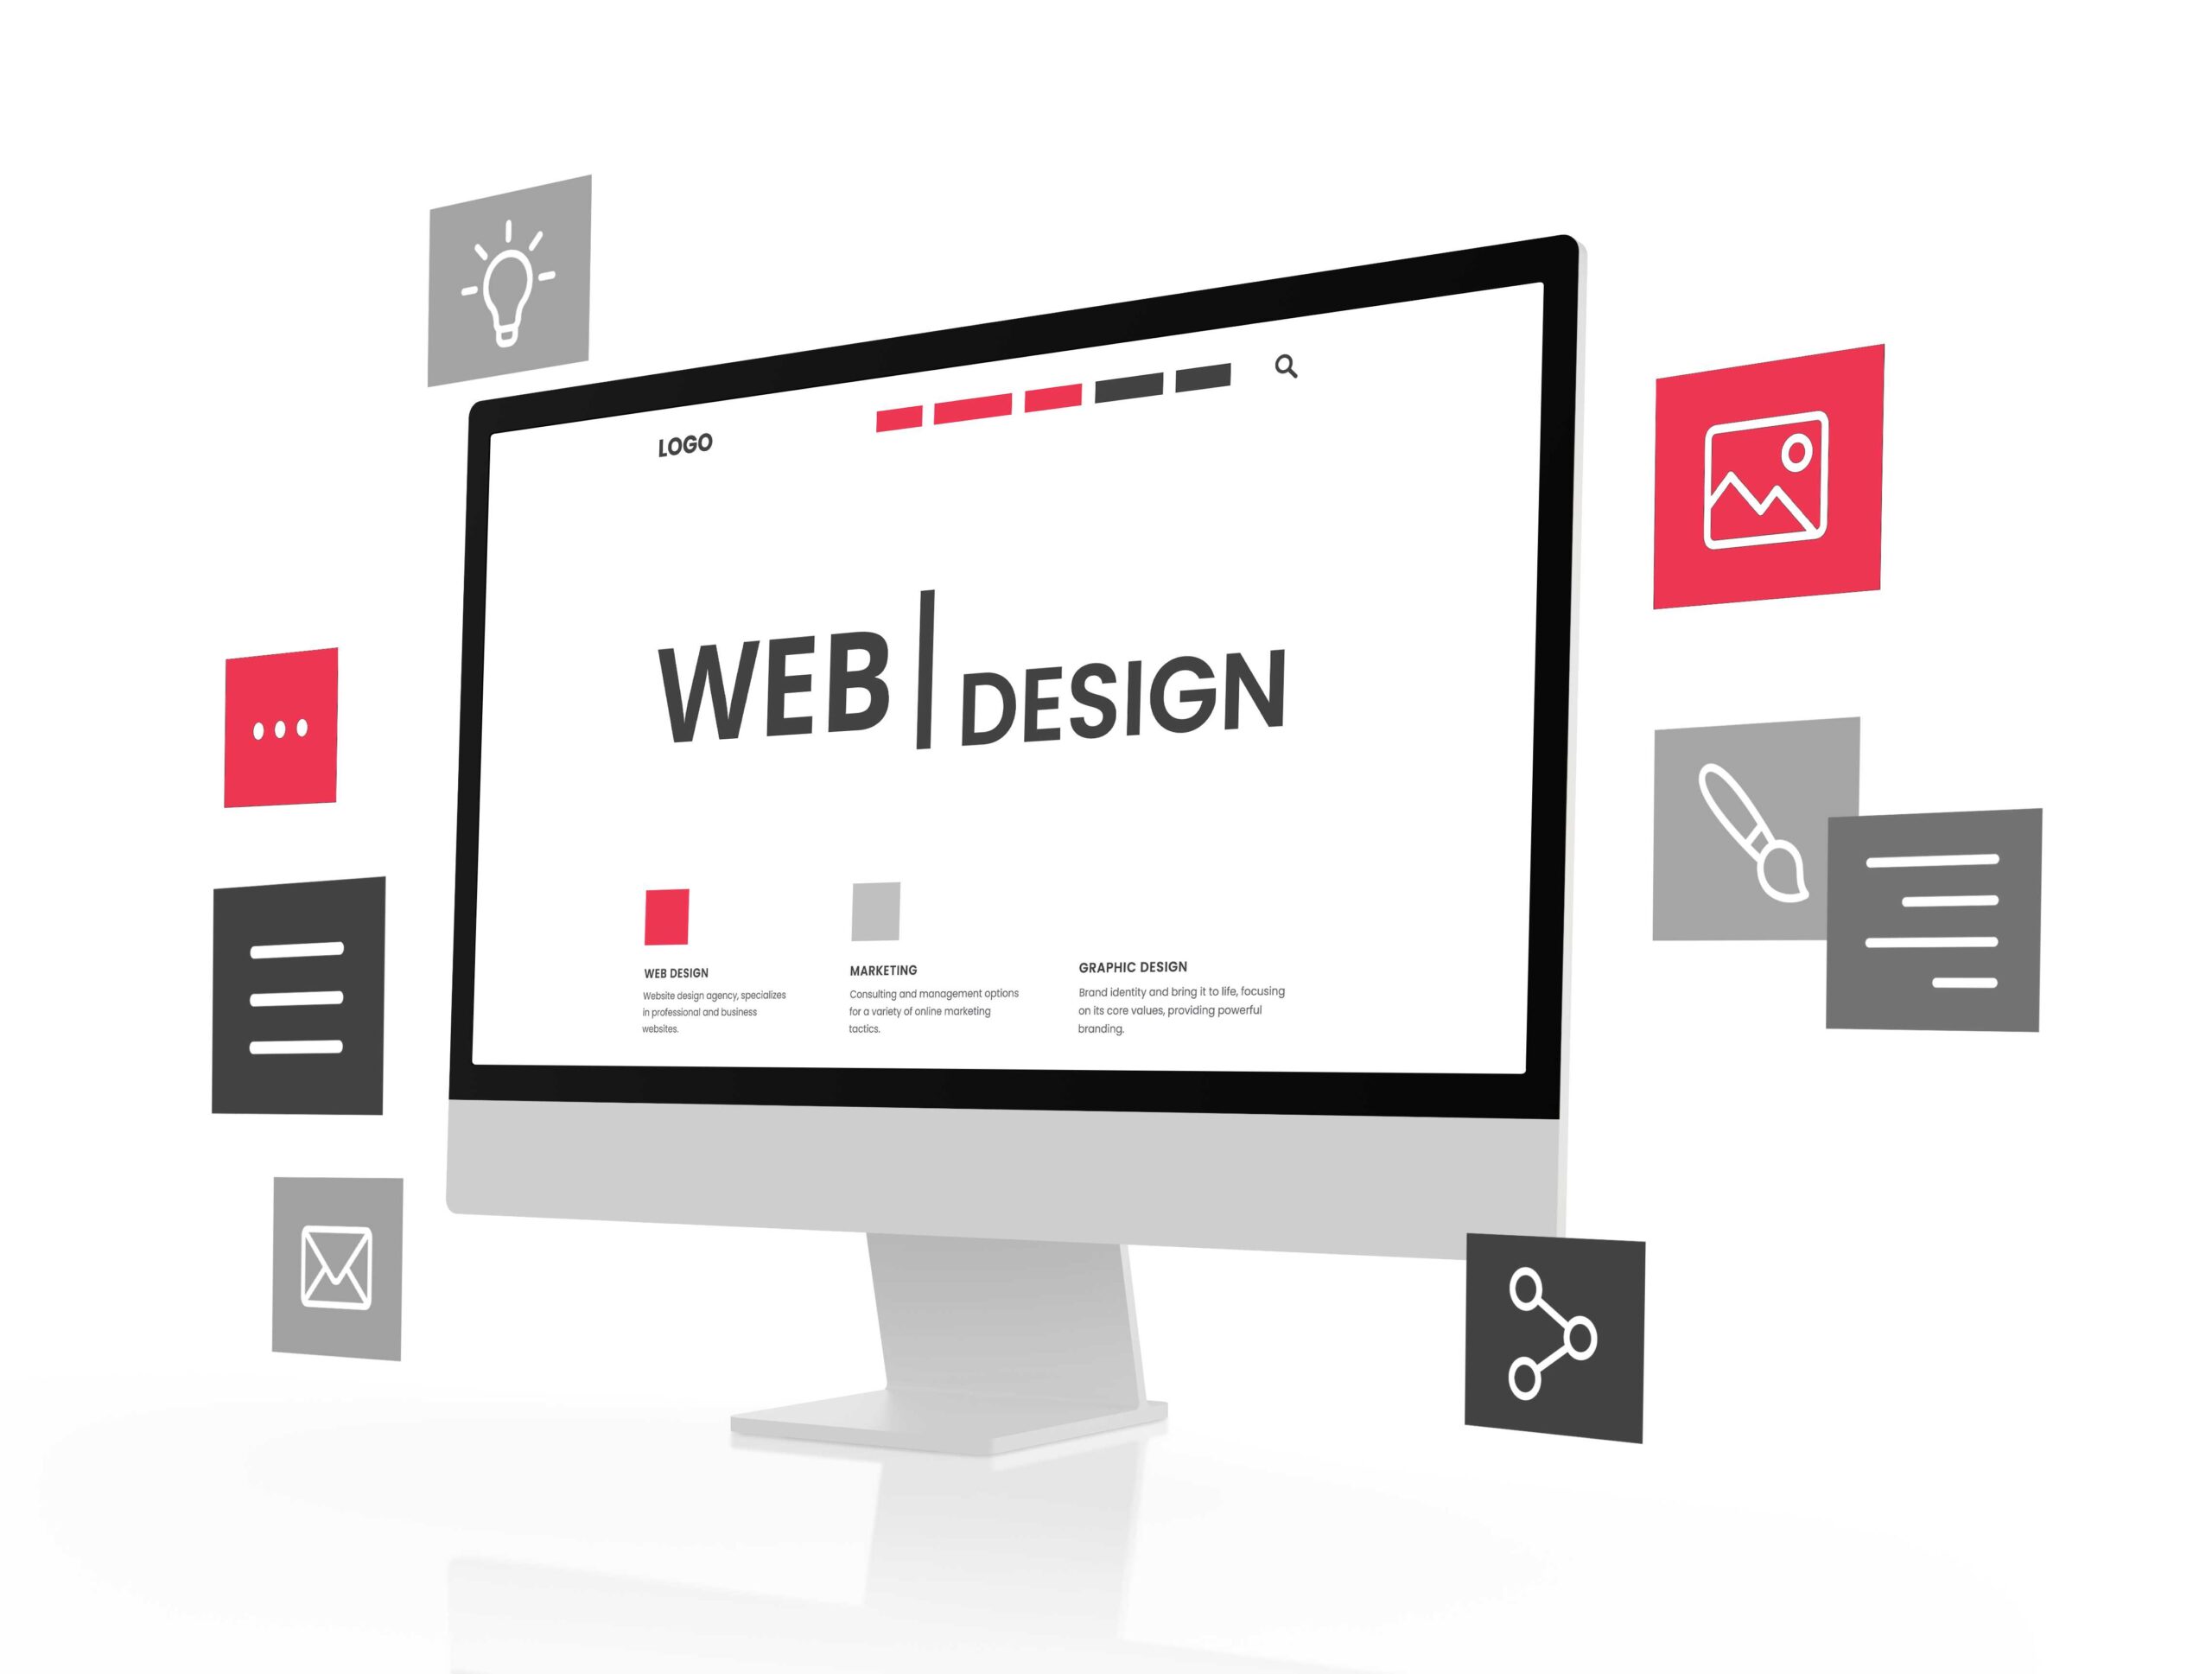 Weblook web design services in Sri Lanka process